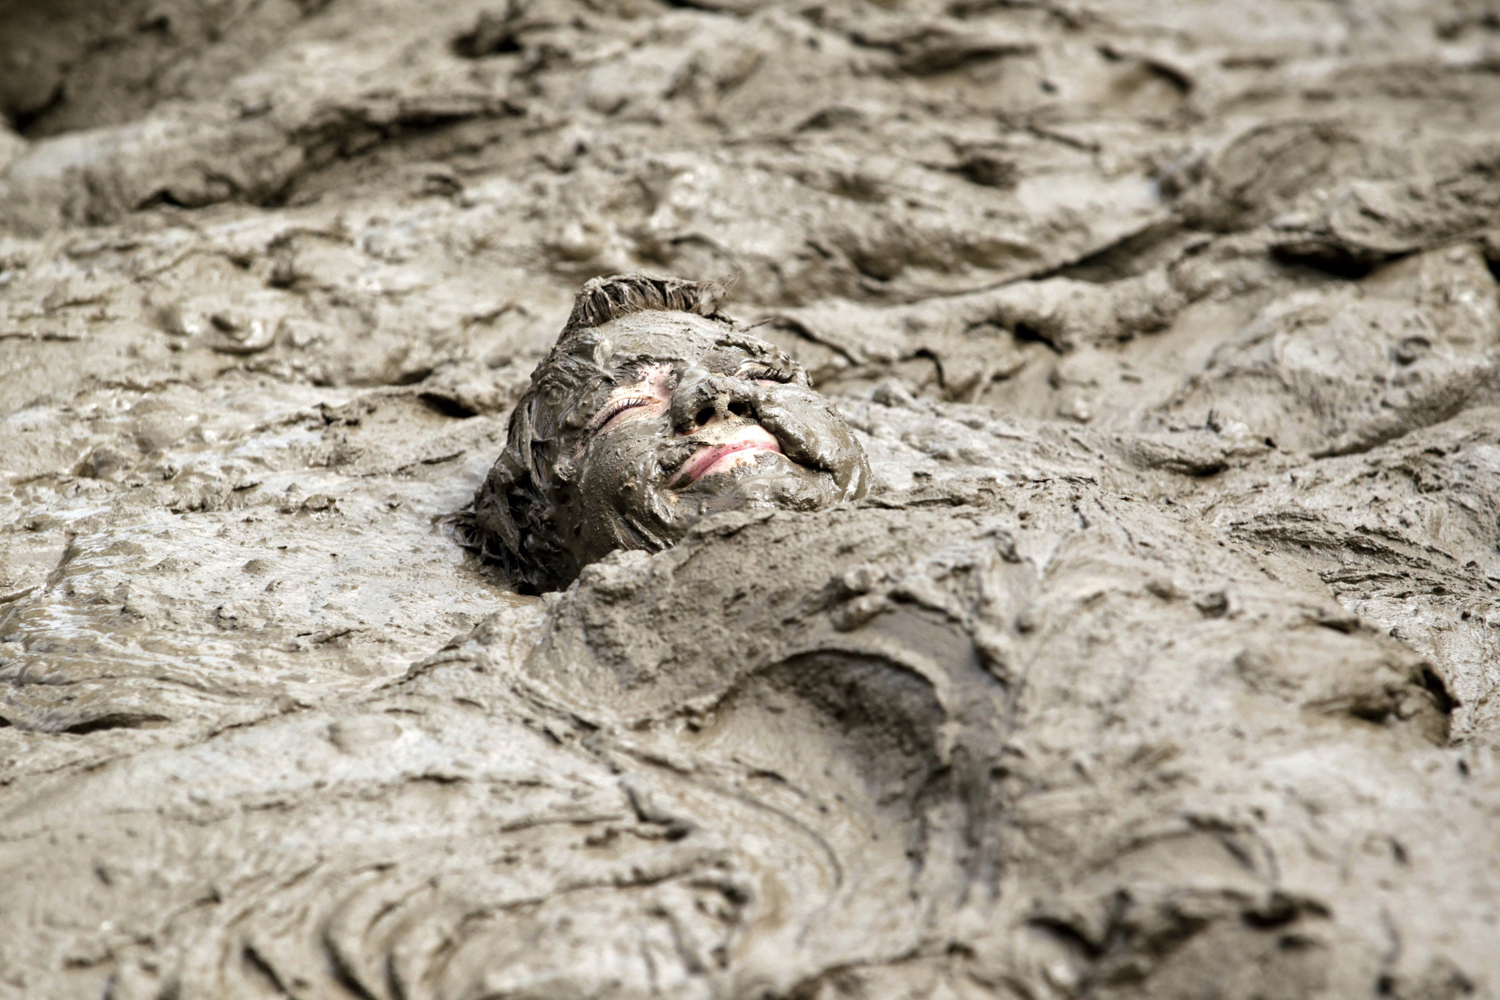 Mud Day in Michigan